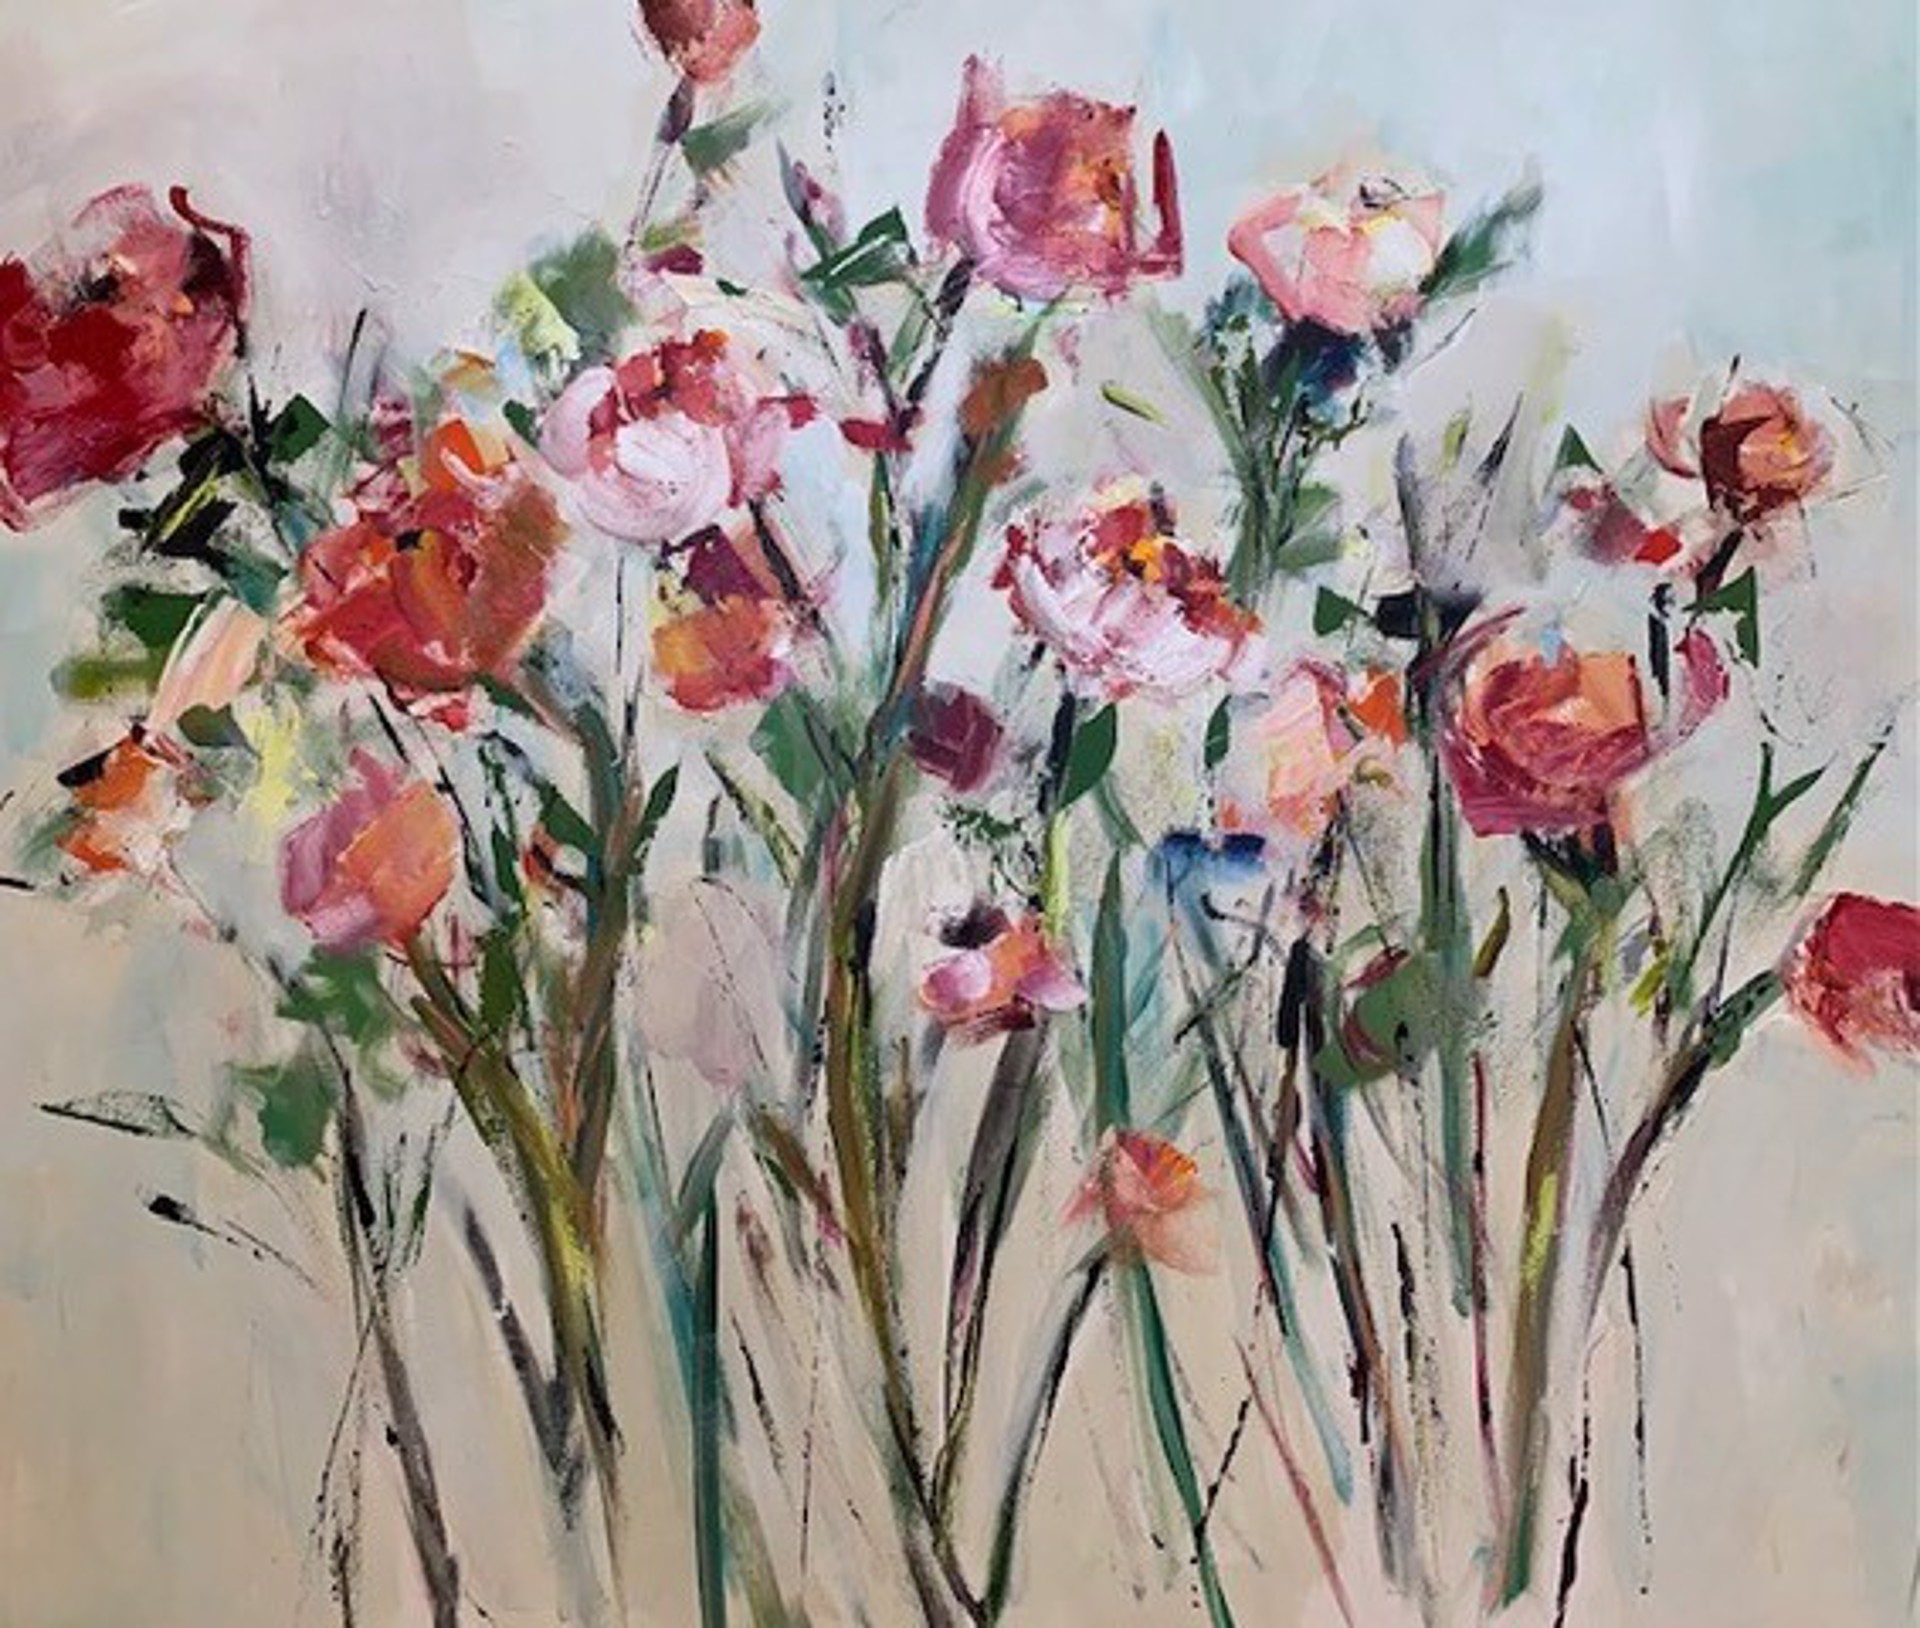 Brings May Flowers by April Riley